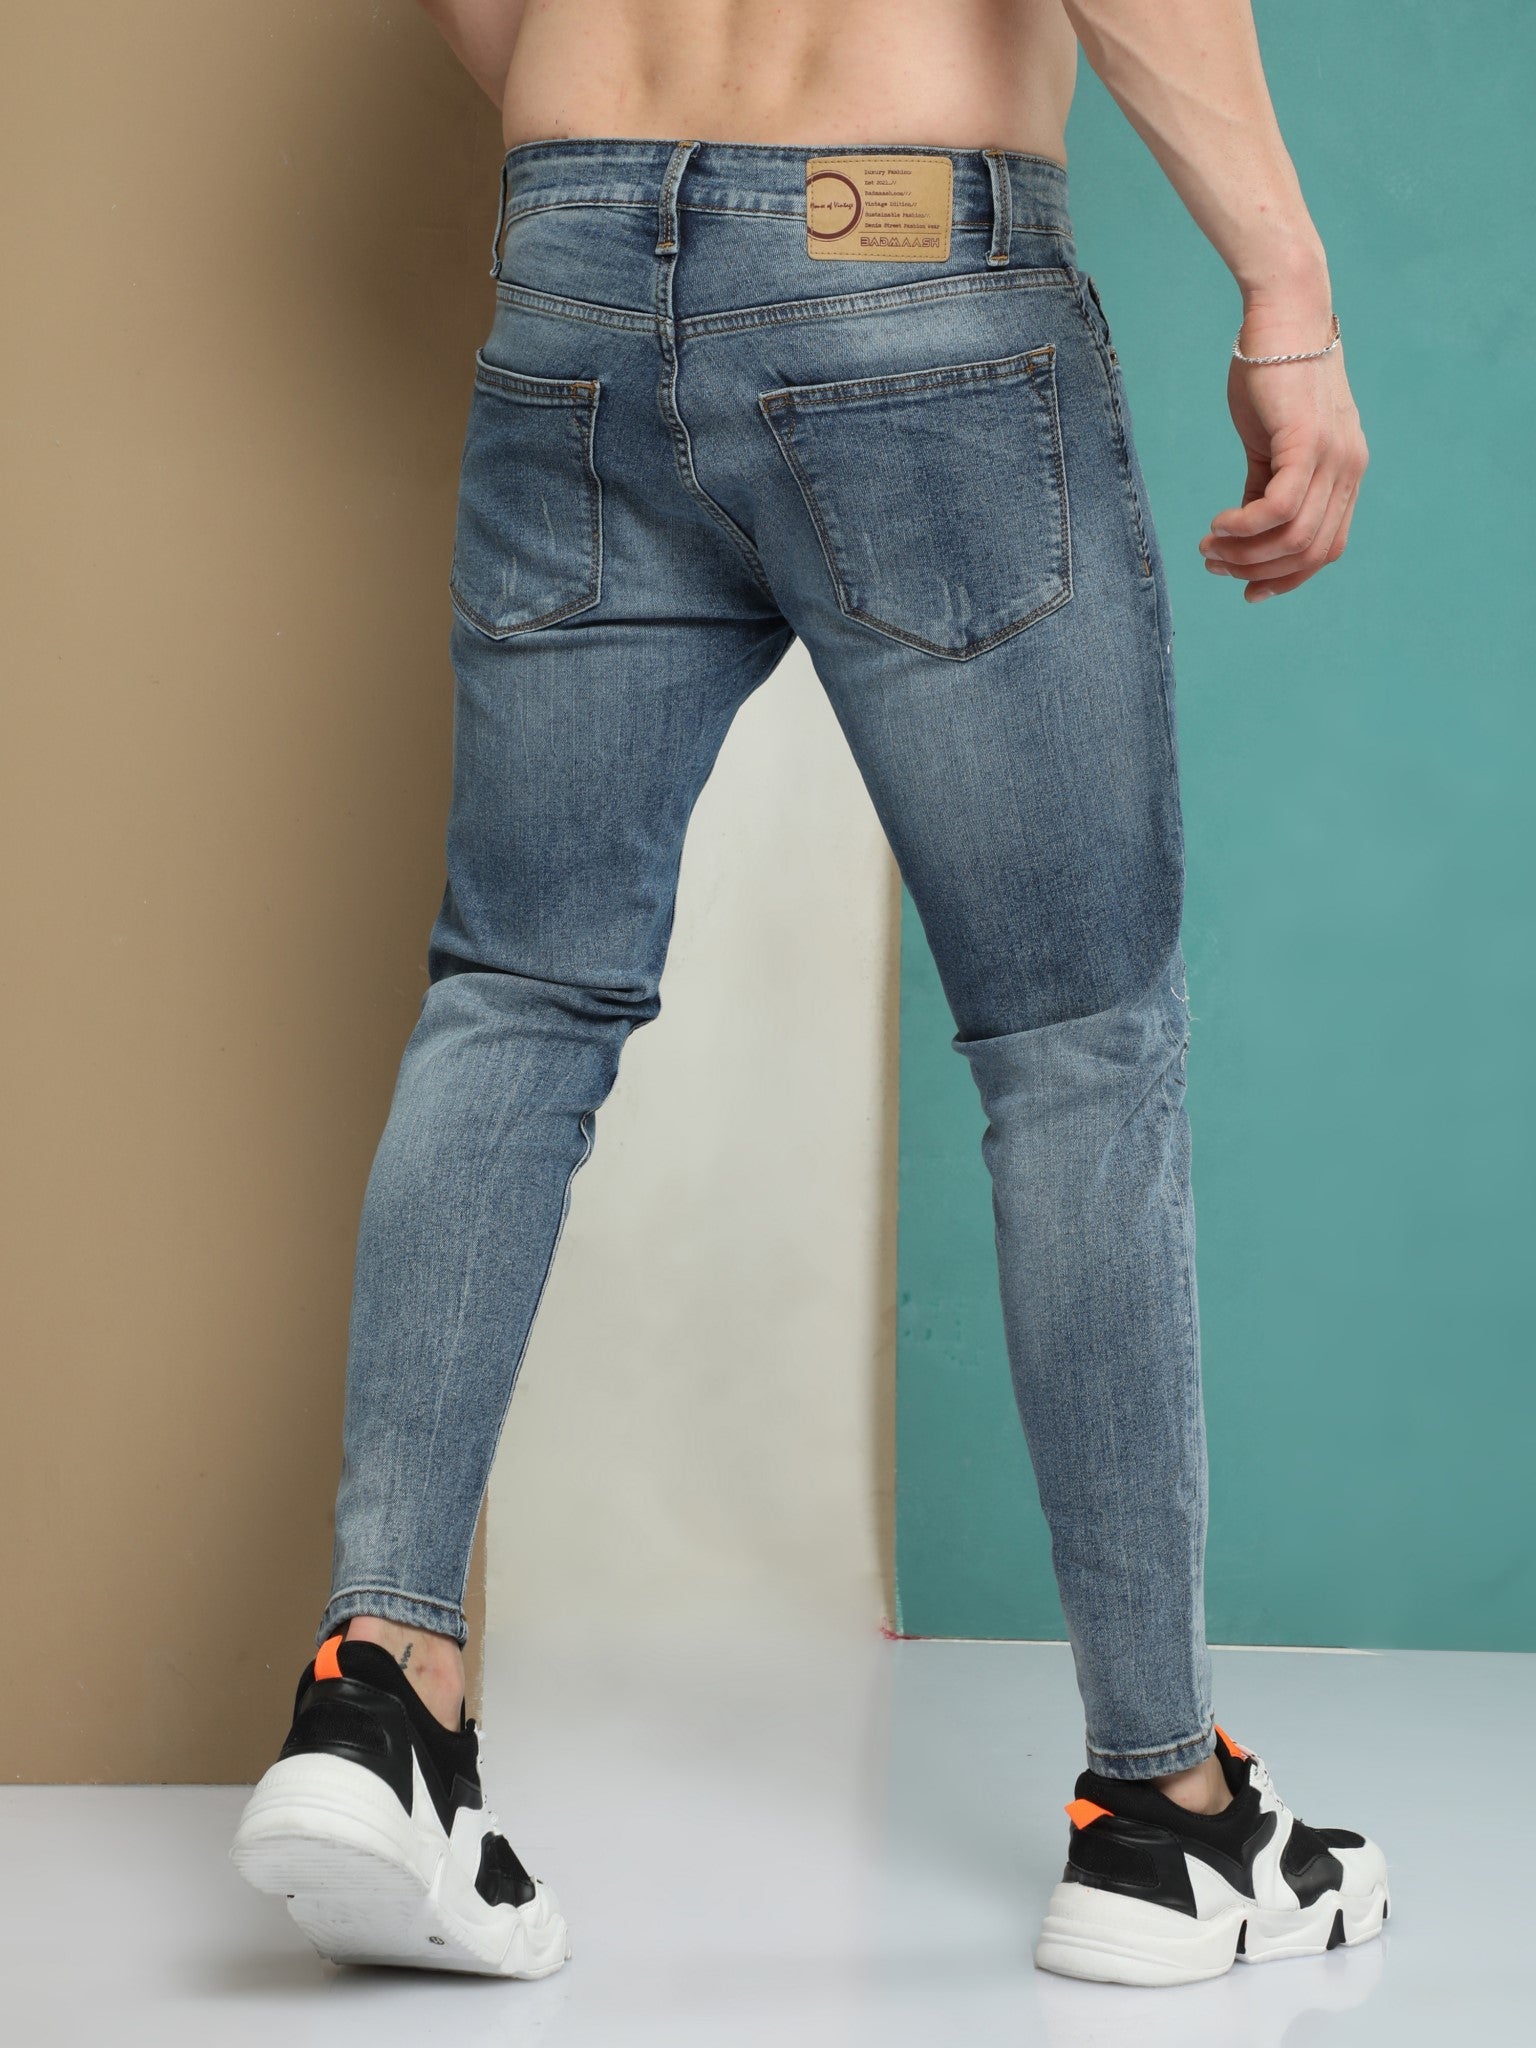 Yinmn Blue Skinny Jeans